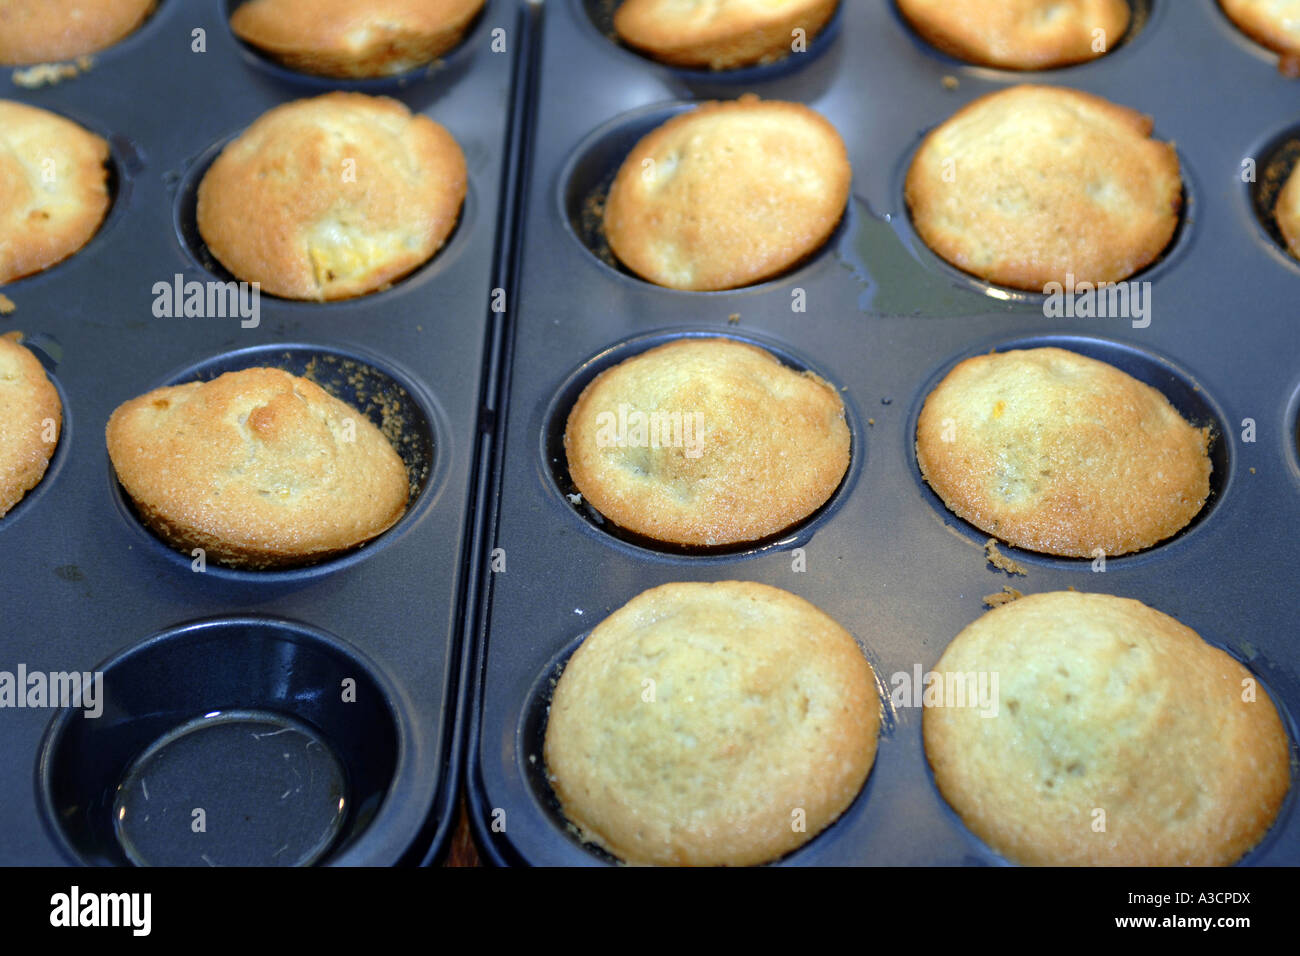 Homemade Cakes in non-stick baking trays Stock Photo